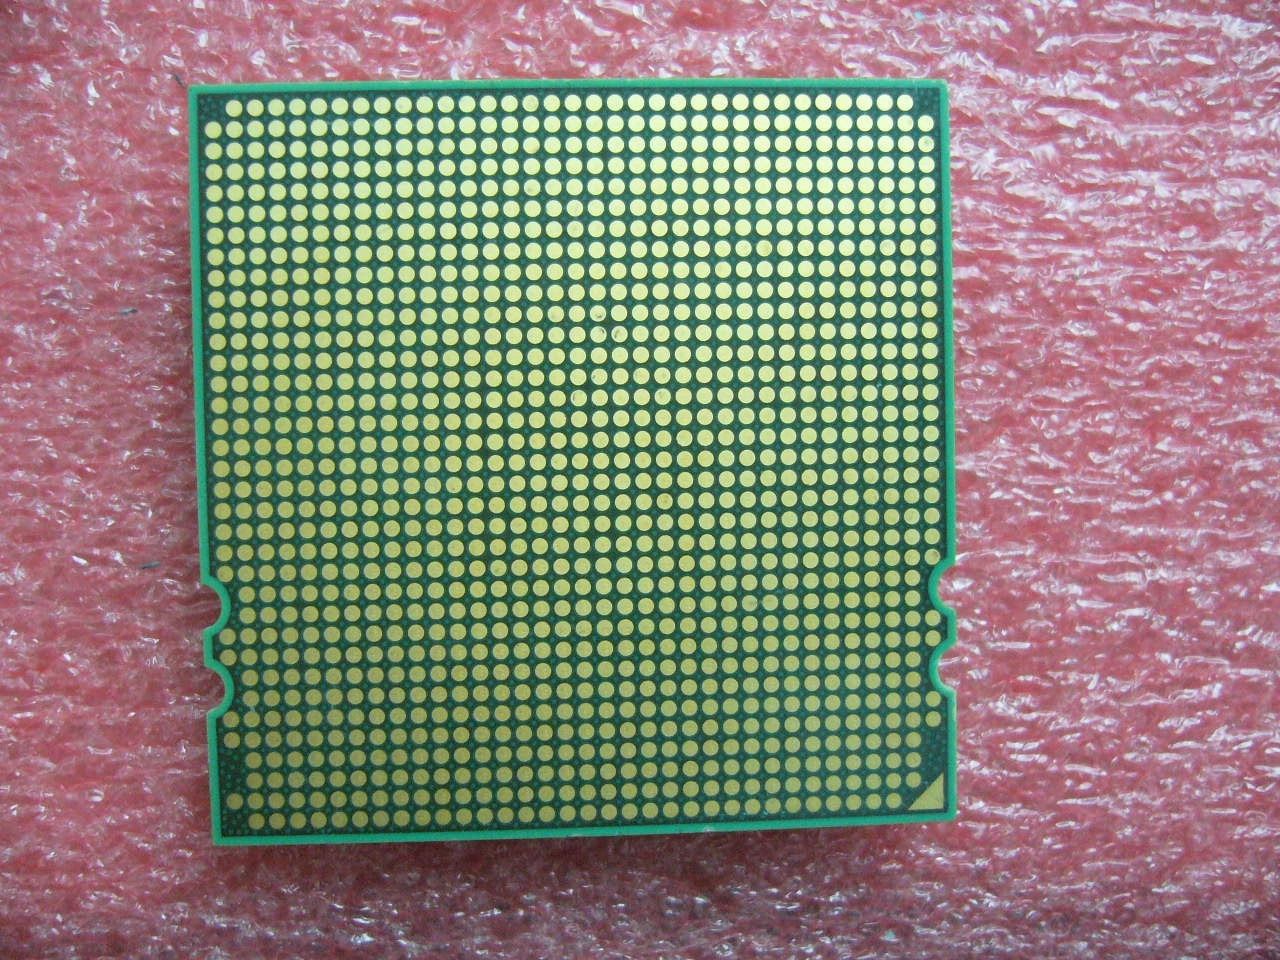 QTY 1x AMD Opteron 2372 HE 2.1 GHz Quad-Core OS2372PAL4DGI CPU Socket F 1207 - Click Image to Close